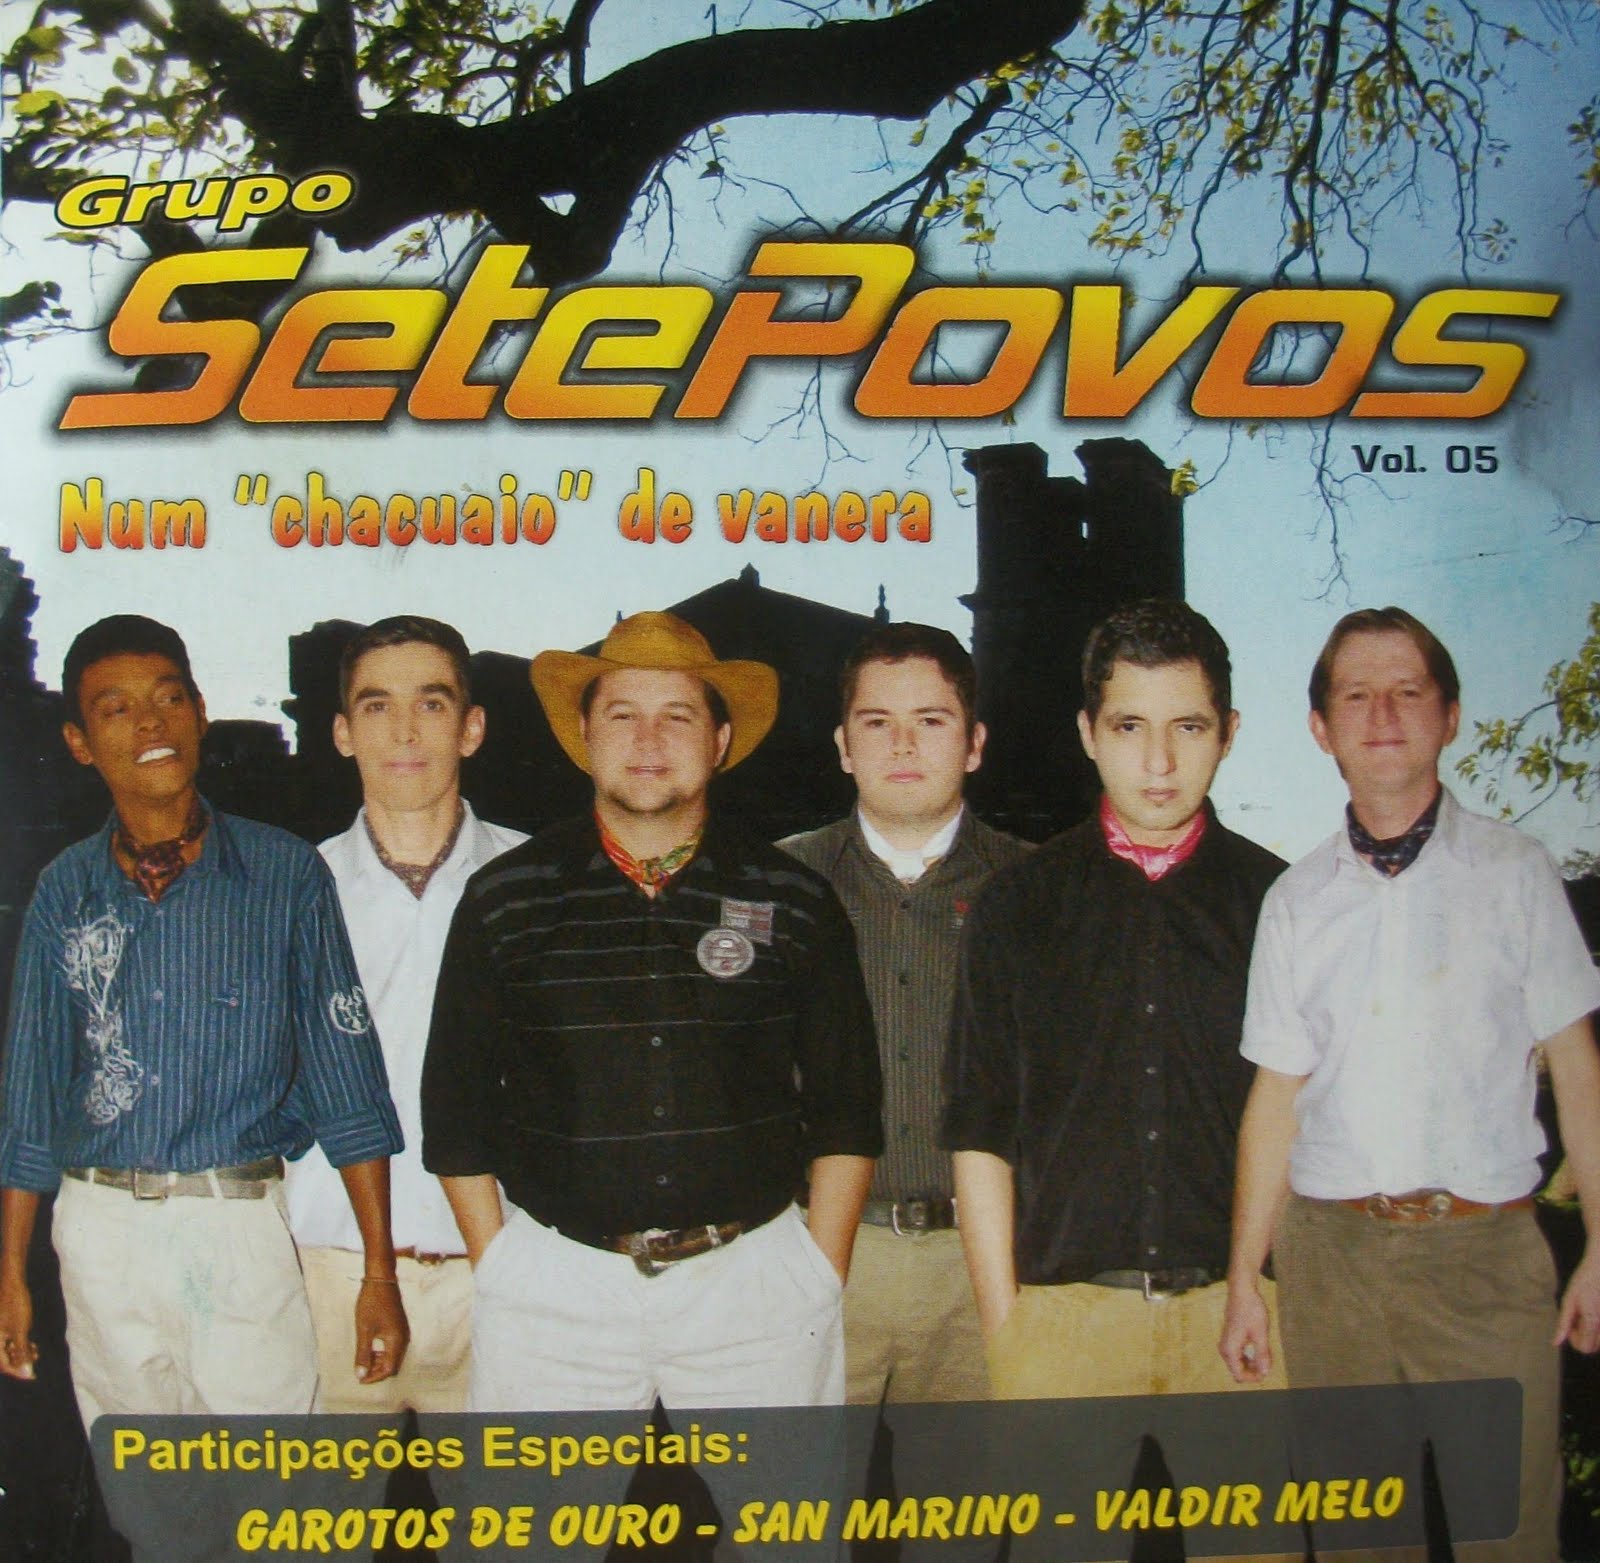 CD Num Chaquaio de Vaneira